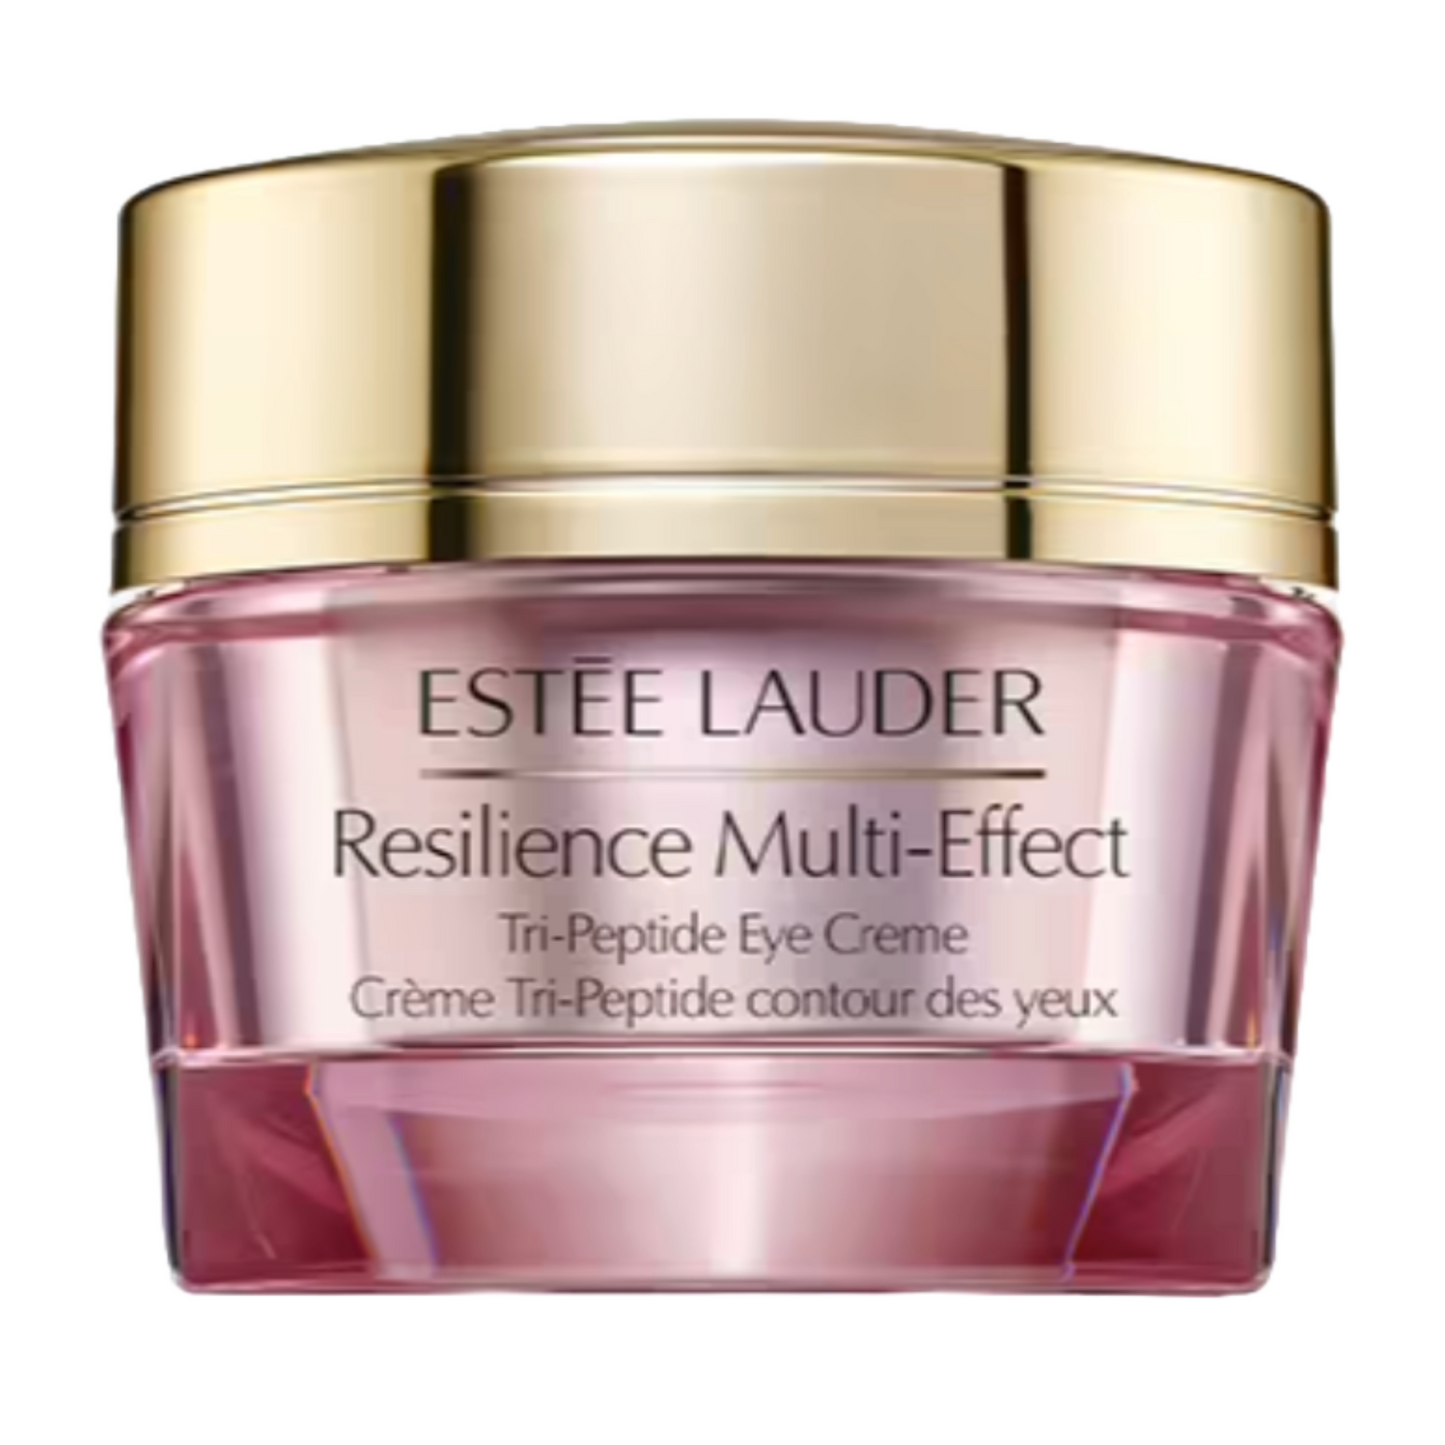 Estee Lauder Resilience Multi-Effect Tri Petide Eye Cream 15 ml (Travel Size) - Anti Aging